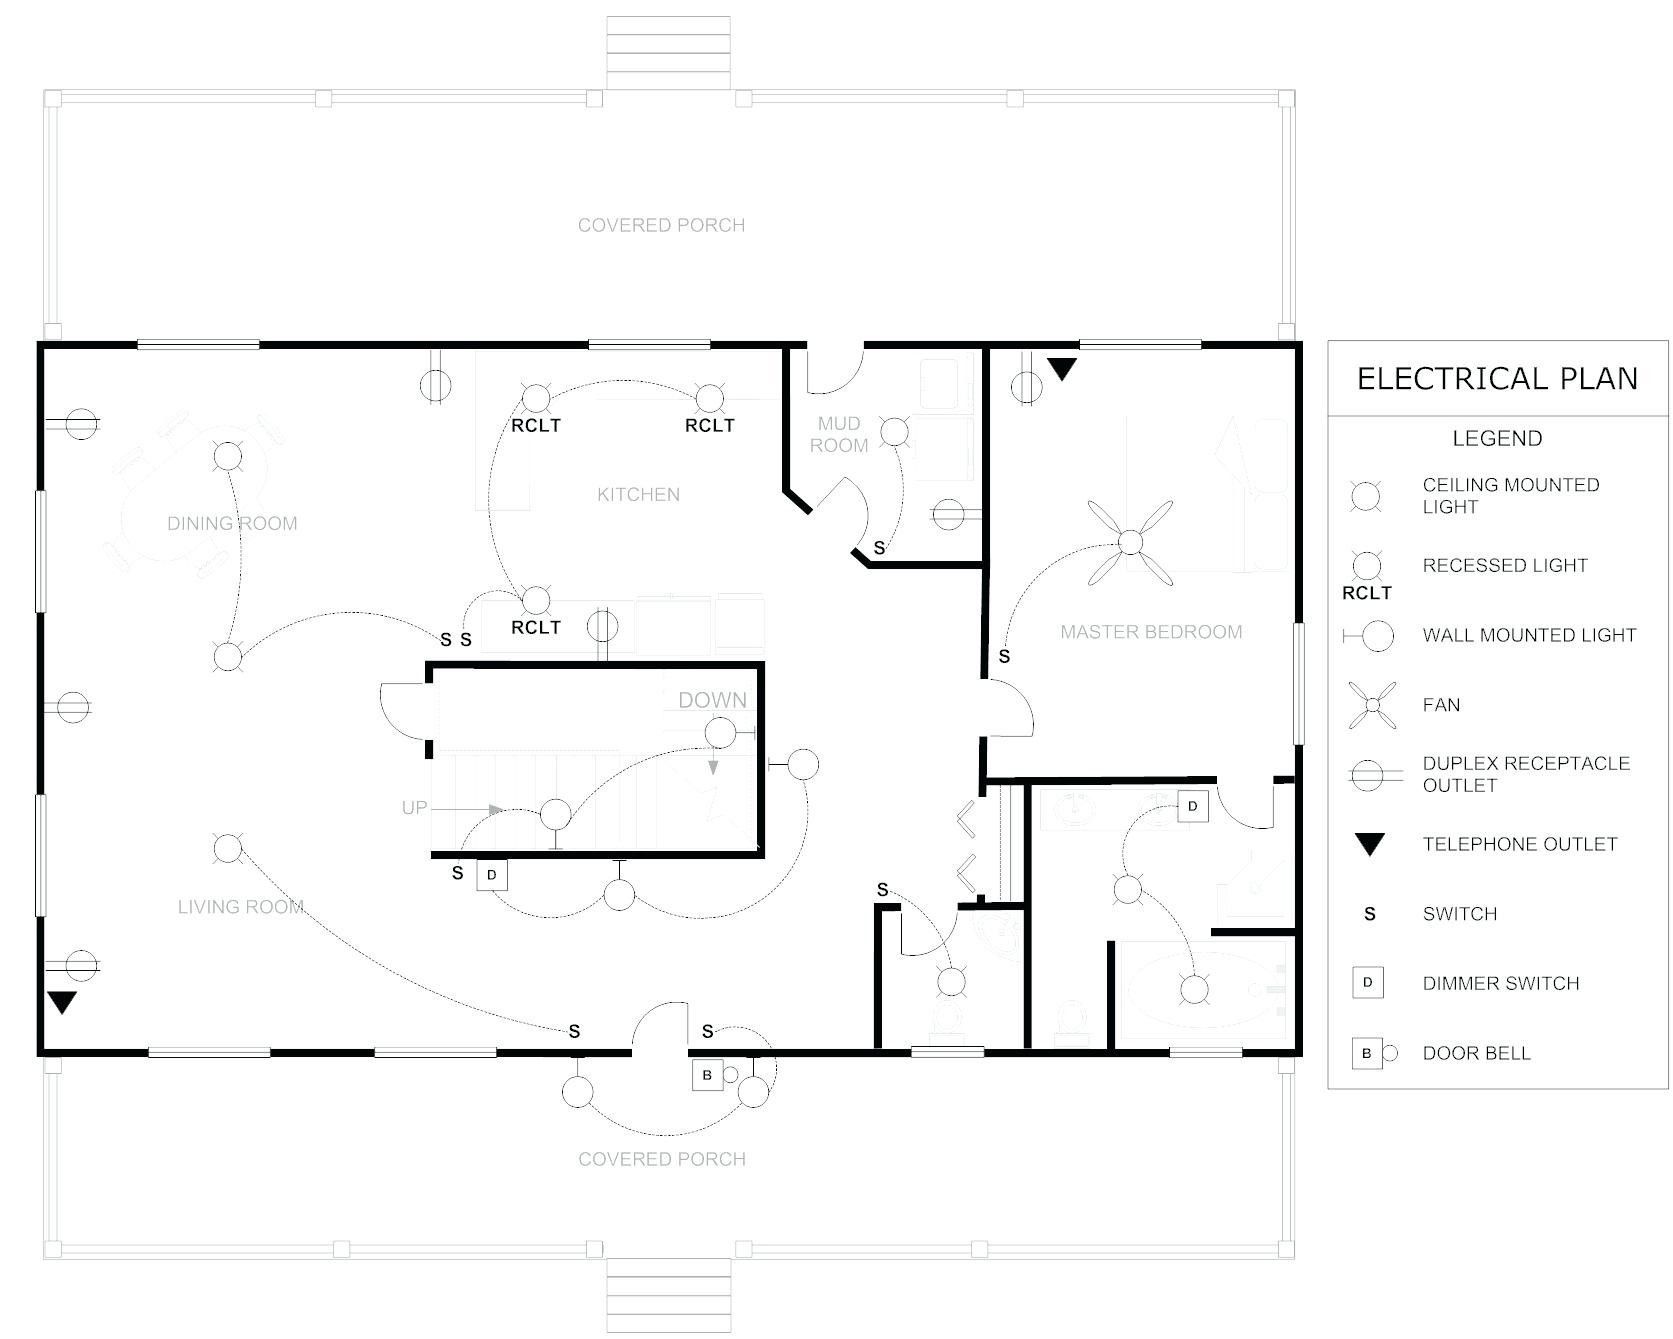 New Electrical Floor Plan Sample diagram wiringdiagram 